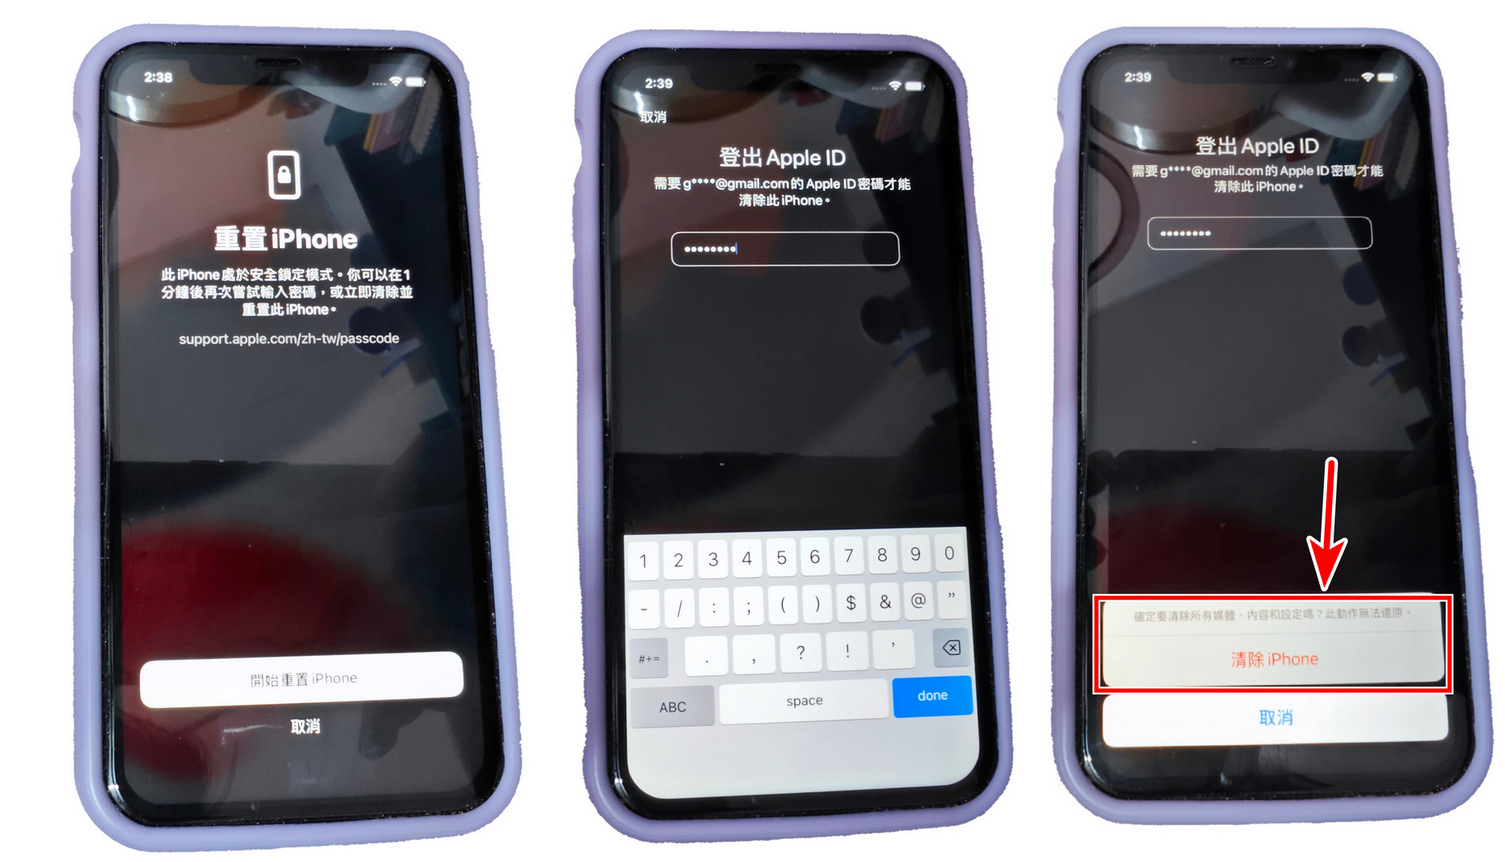 iphone忘記螢幕密碼怎麼辦，3種免電腦解鎖方法! - 網路教學 - 敗家達人推薦